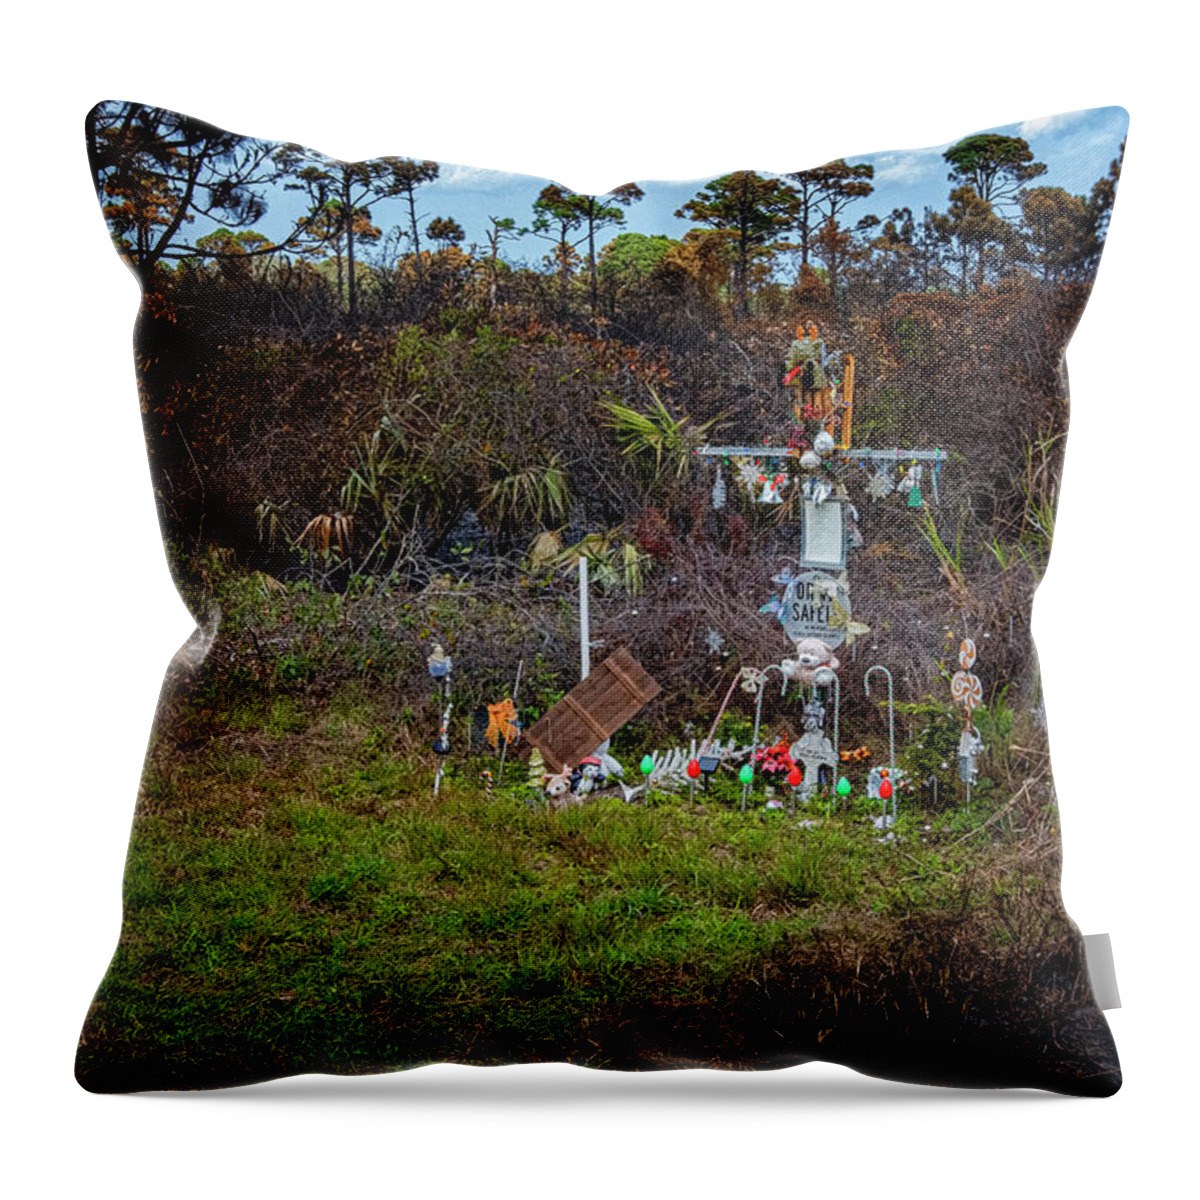 Yard Animals Throw Pillow featuring the photograph Florida Roadside Shrine by Tom Singleton